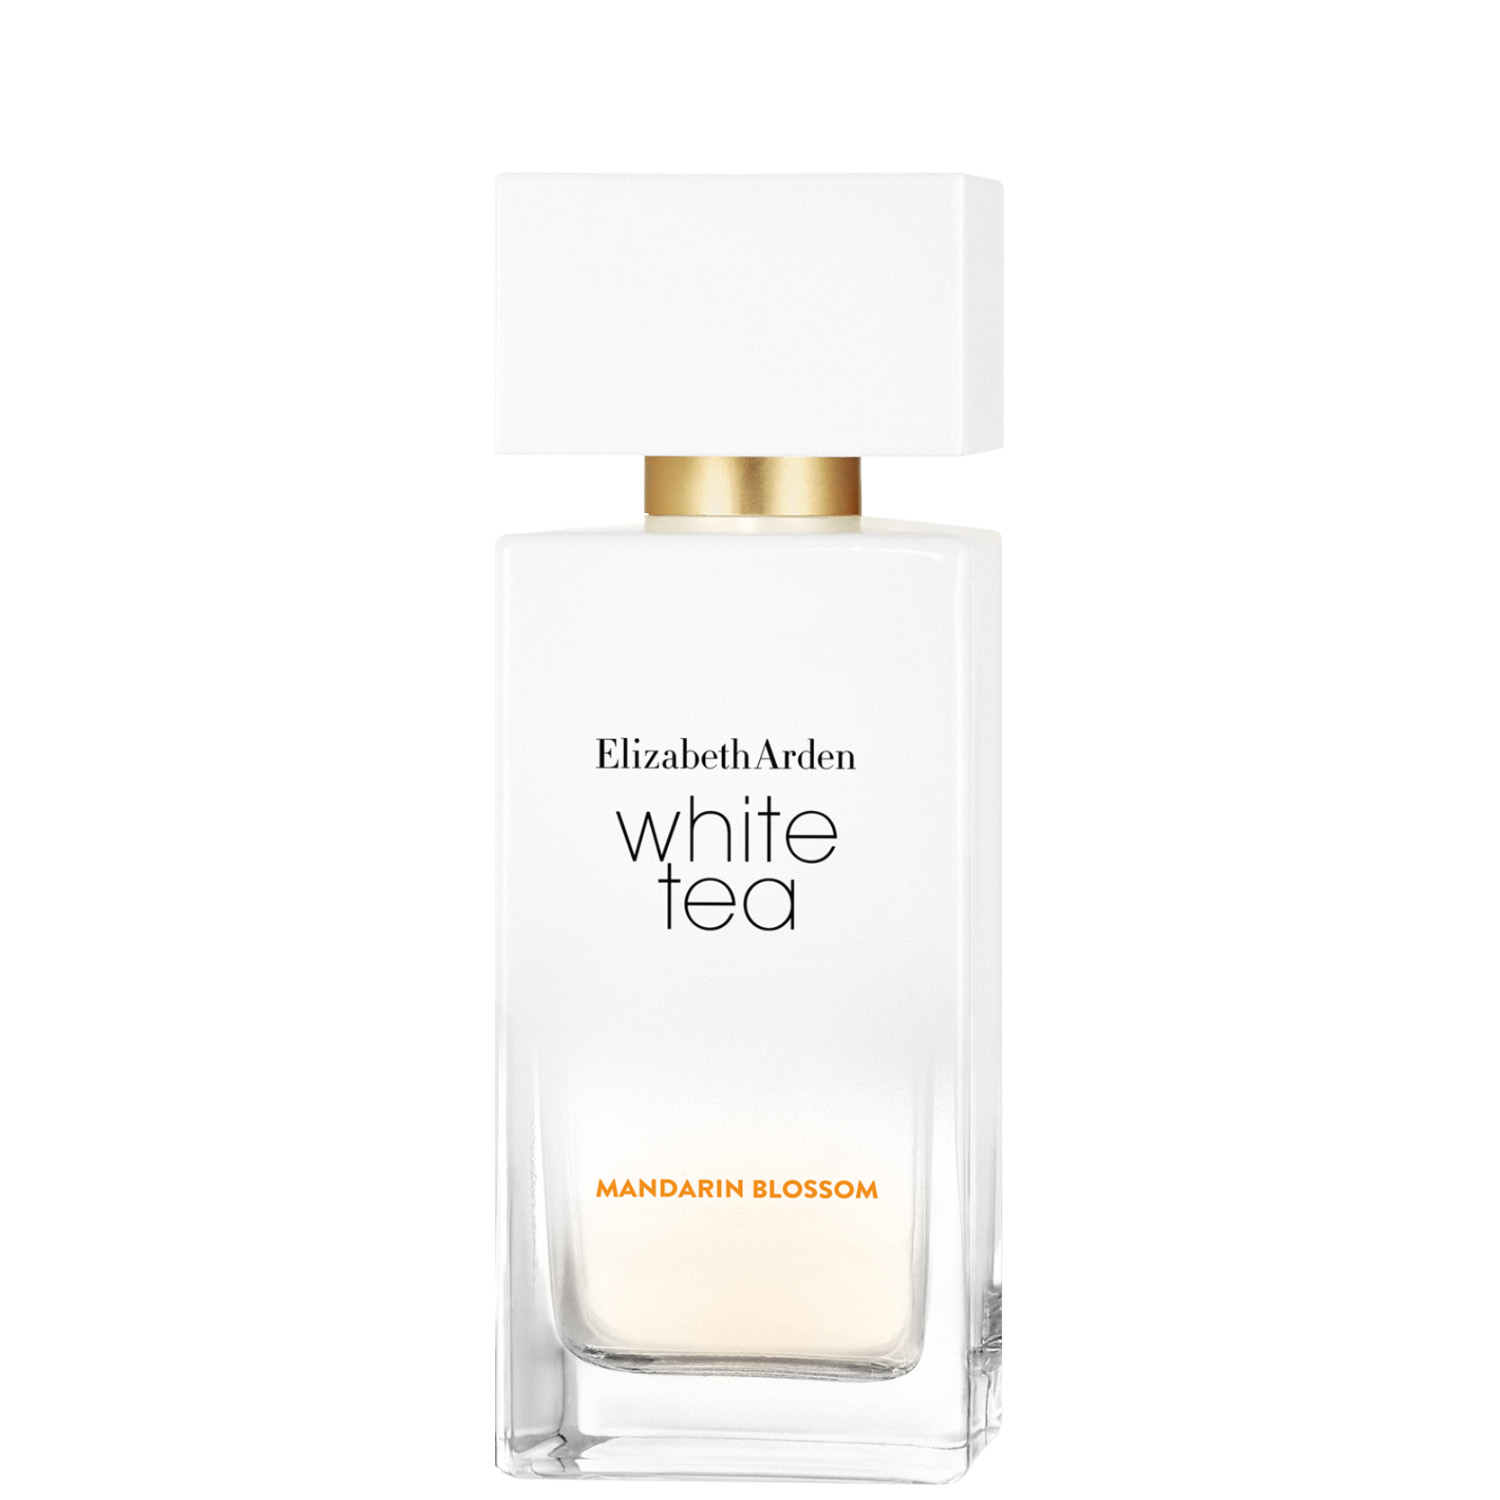 Elizabeth Arden White Tea Mandarin Blossom Eau de Toilette 50ml